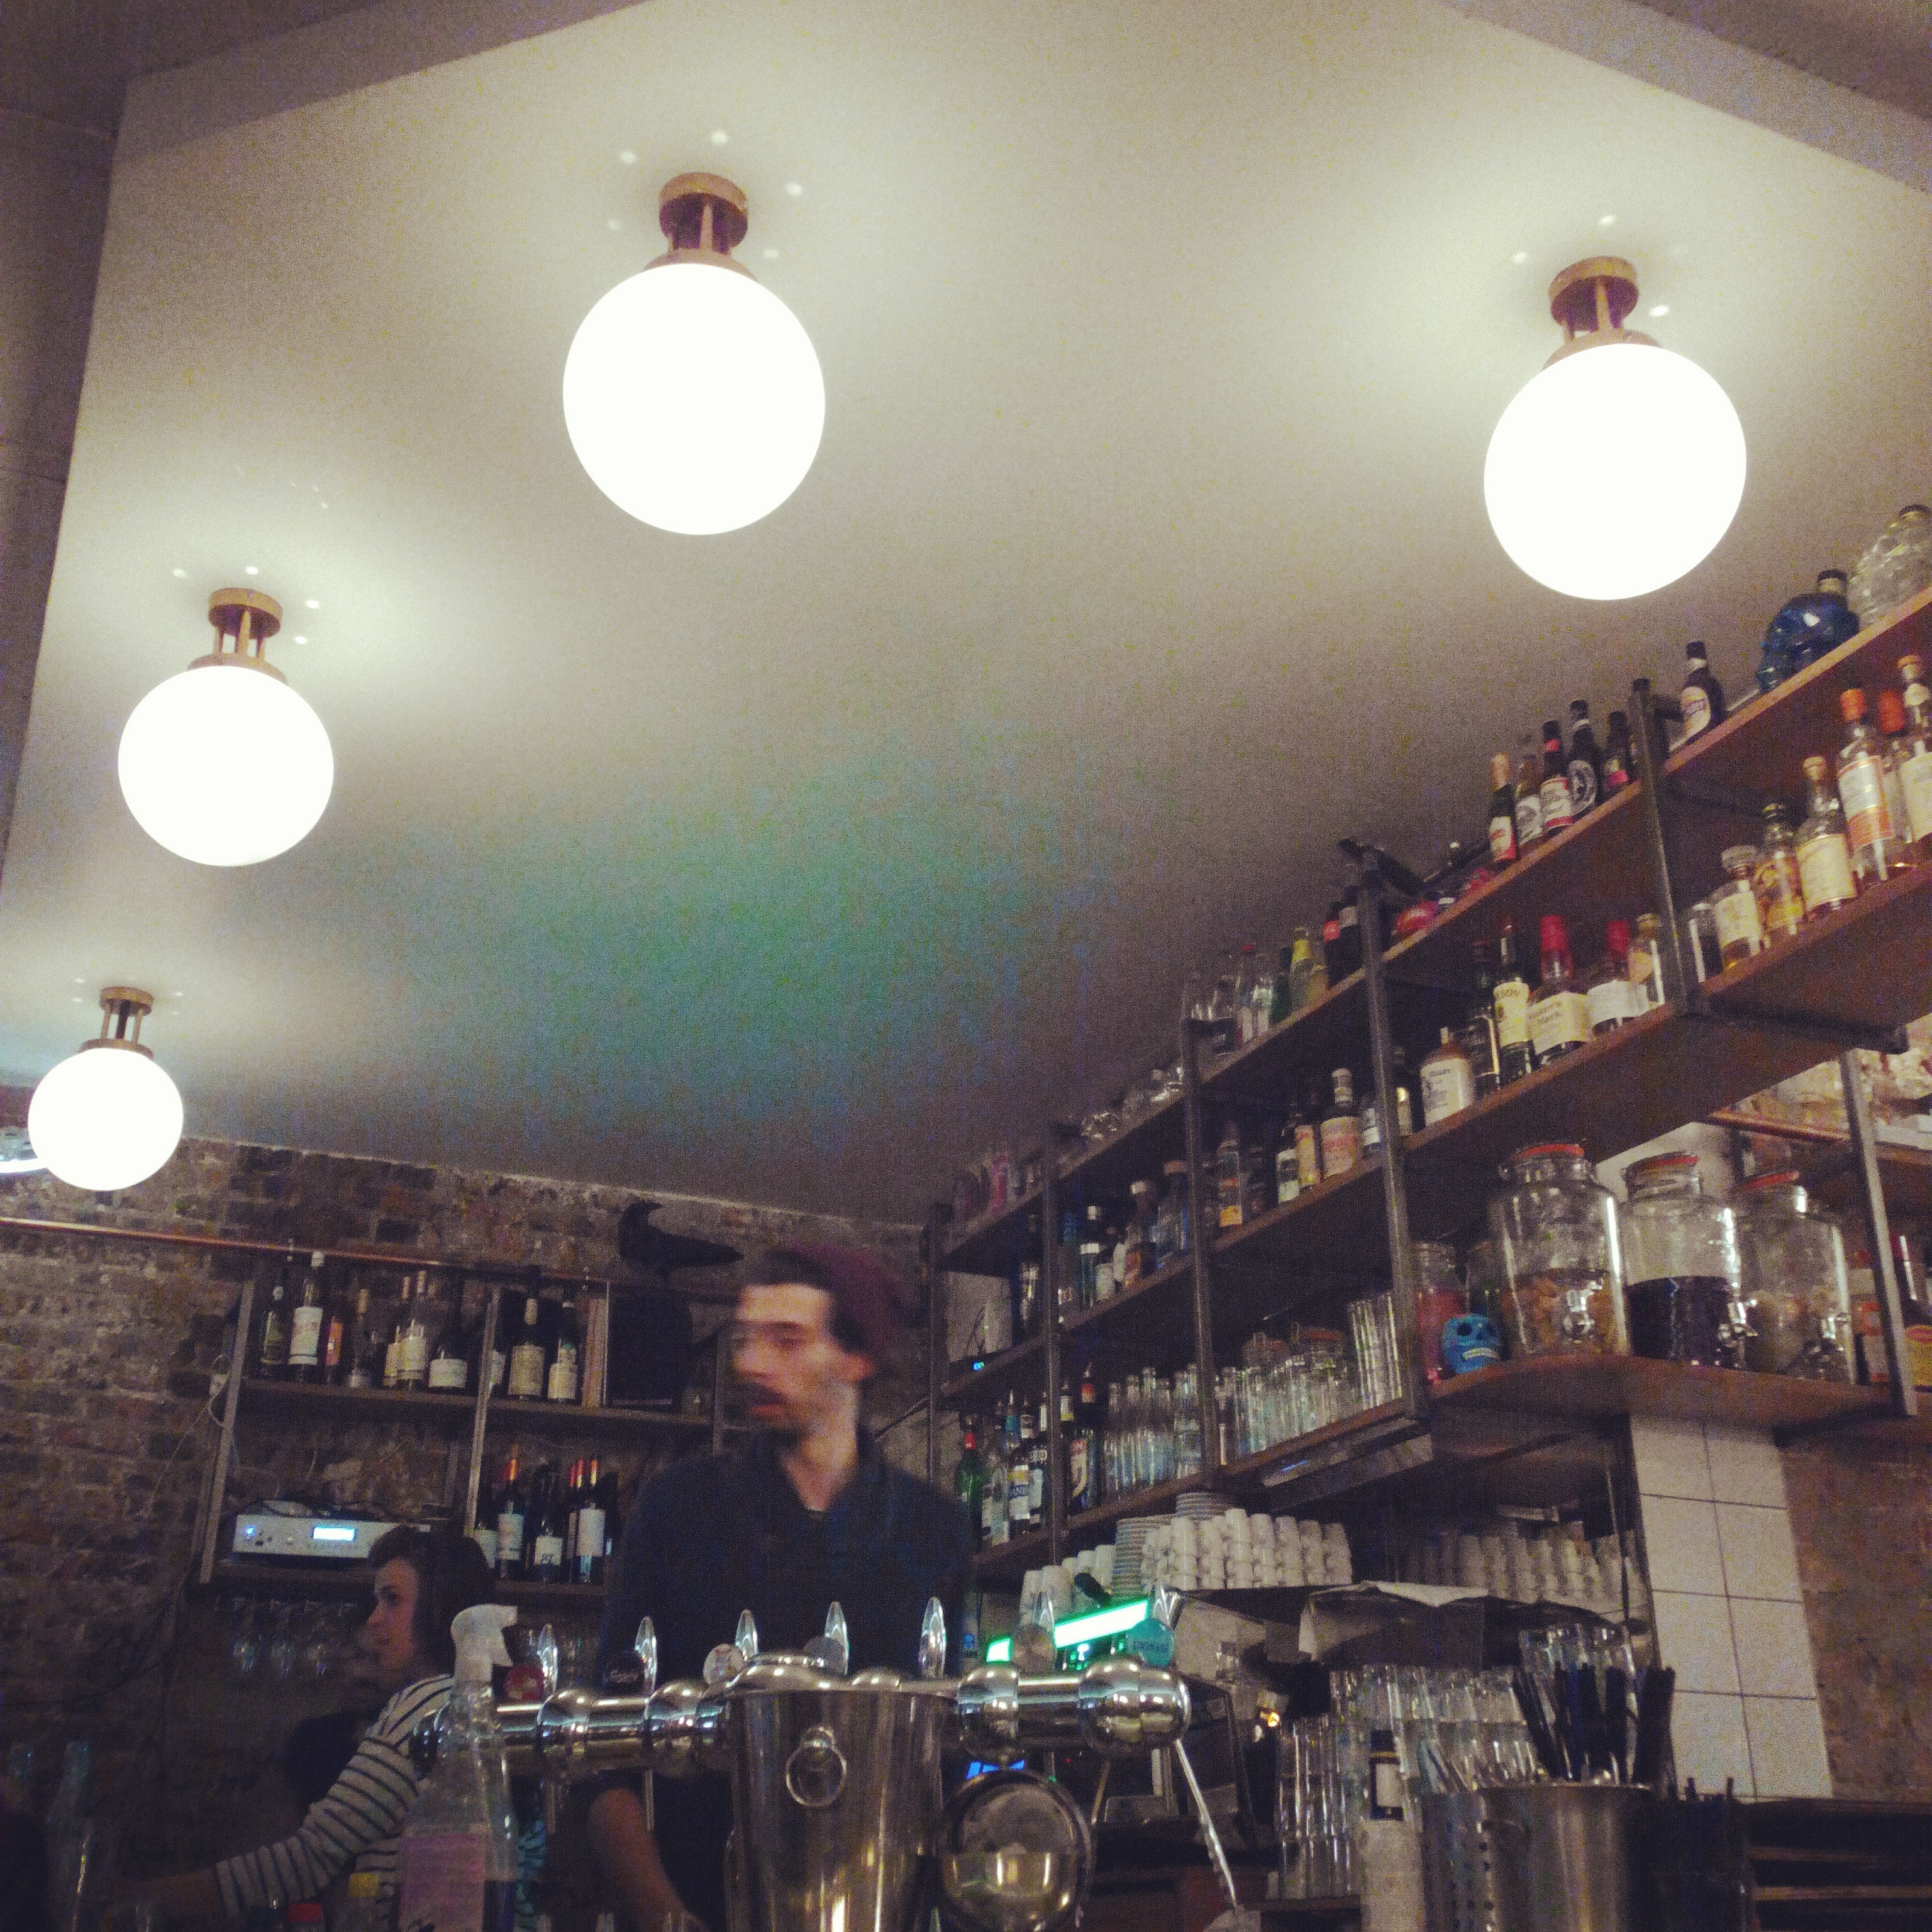 A bartender behind the counter at Triplettes Bar, Paris, France